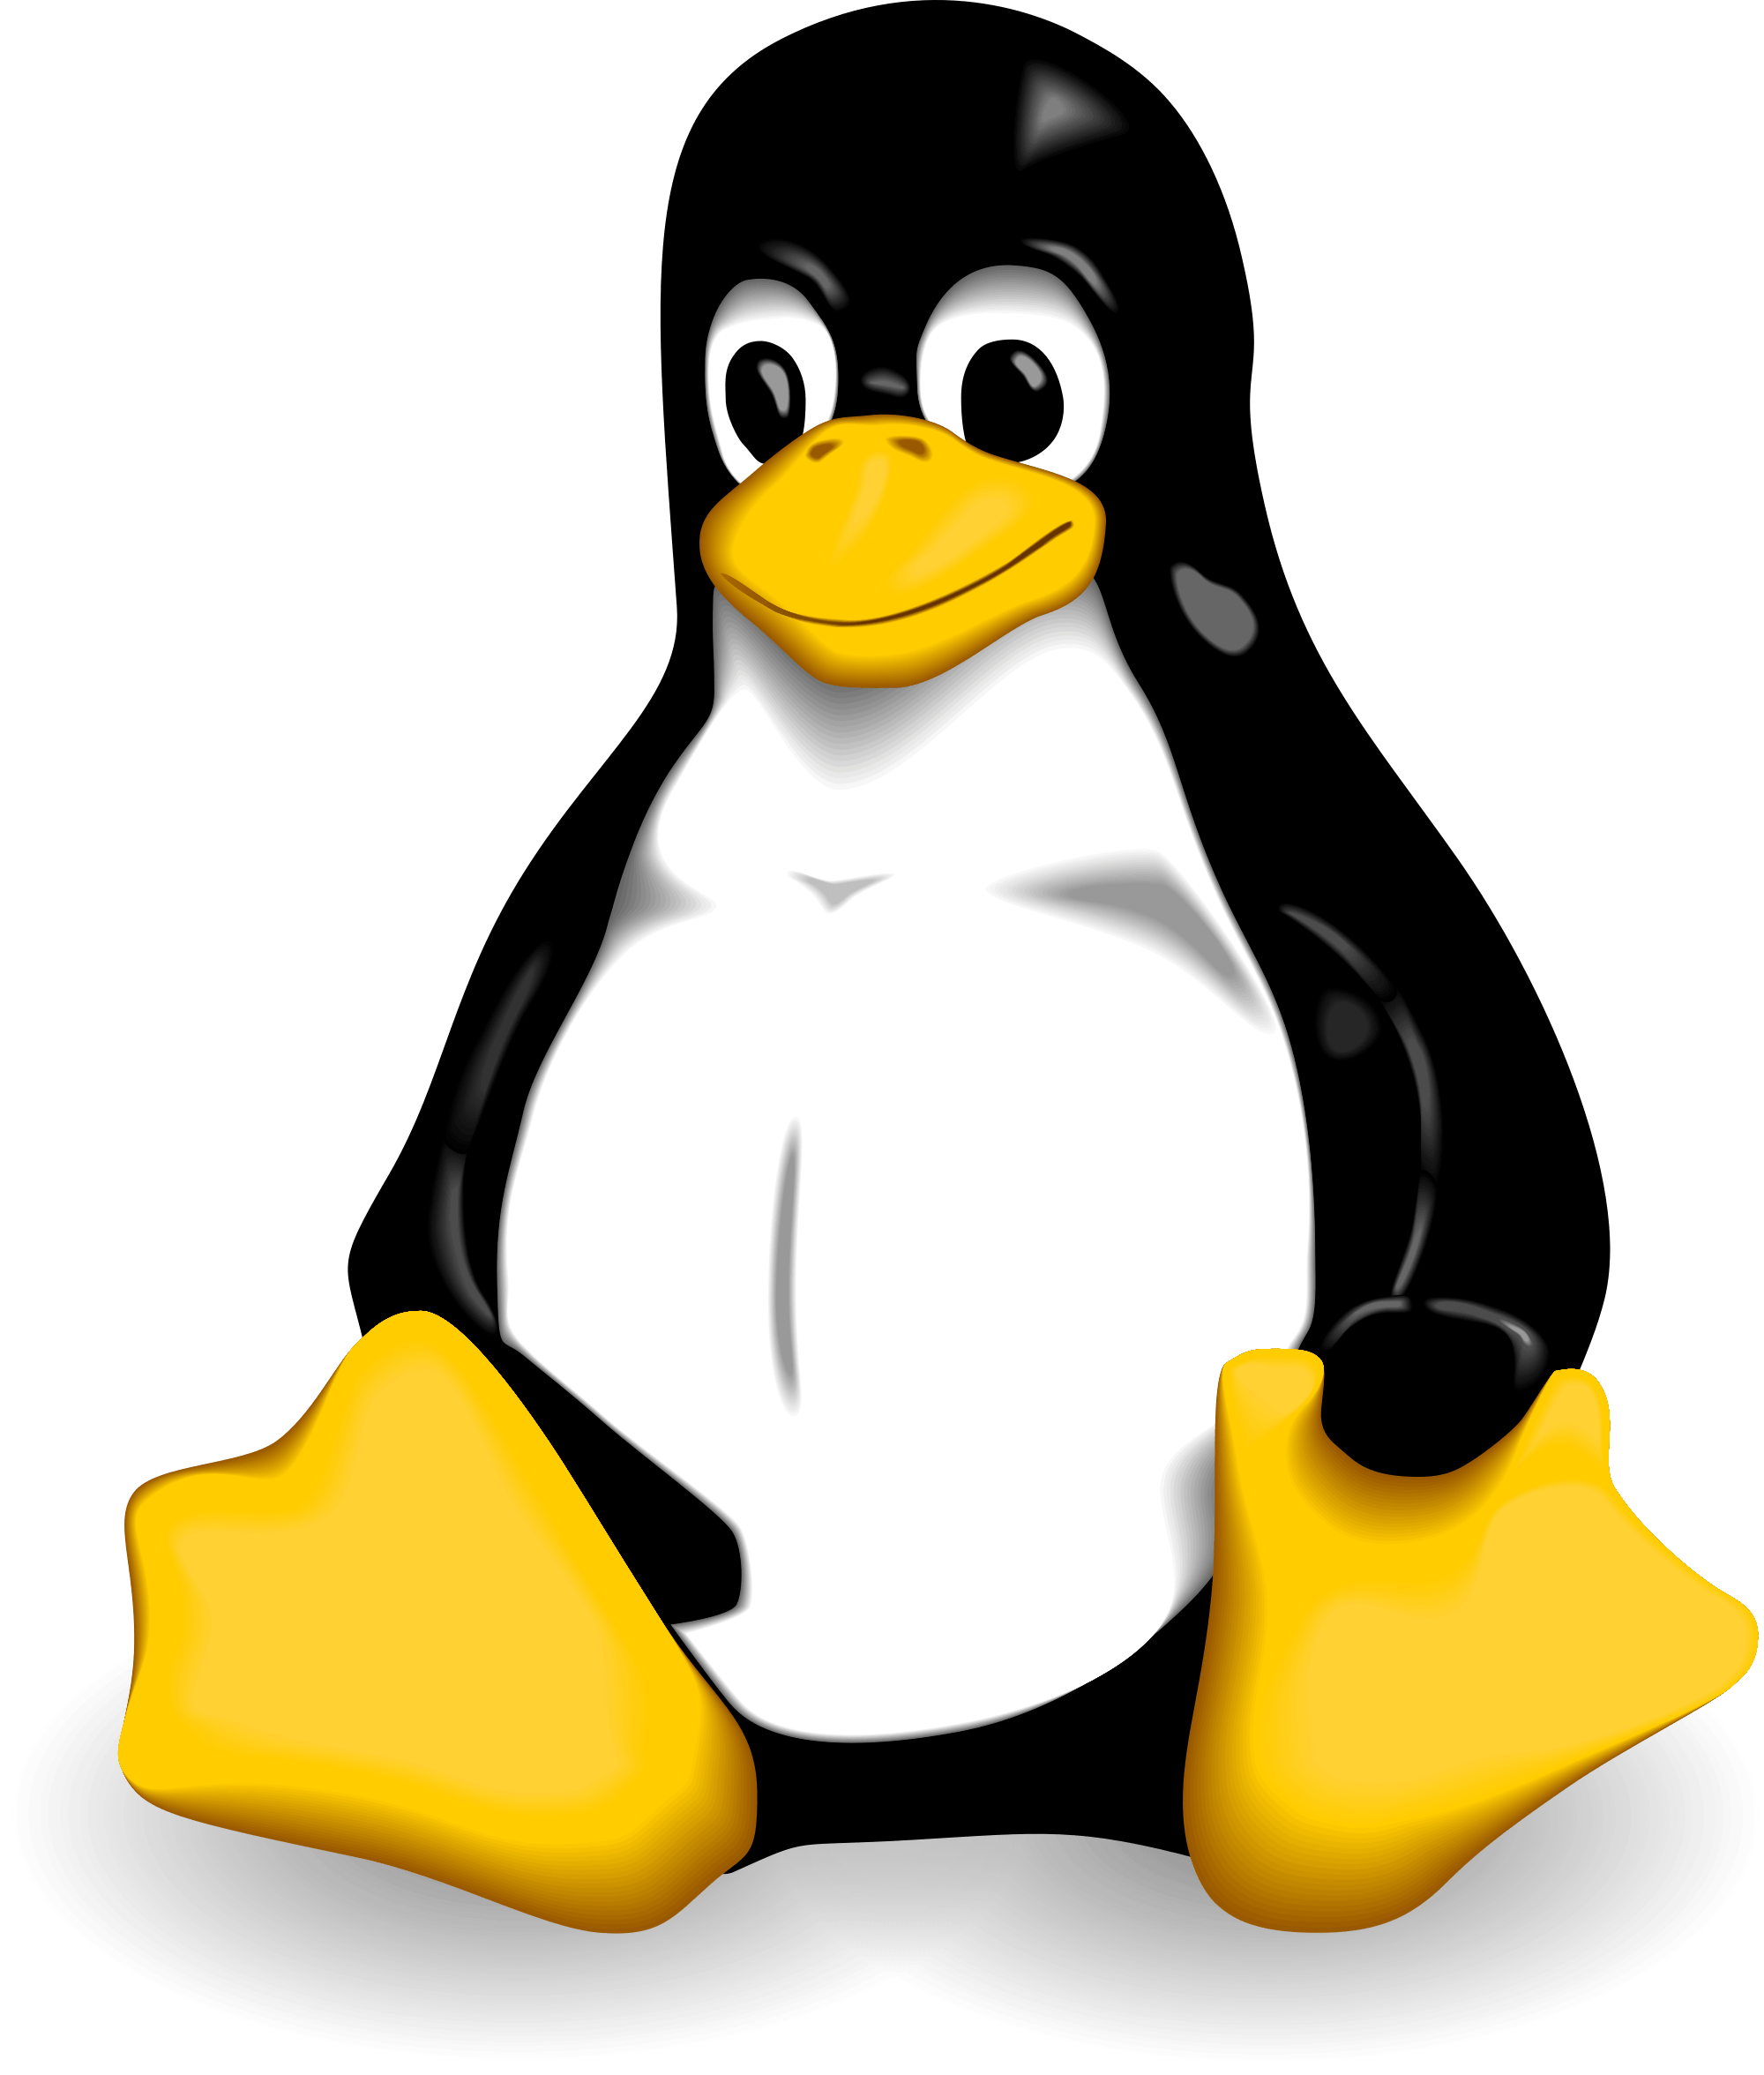 Latest Linux Logo - Linux logo.png